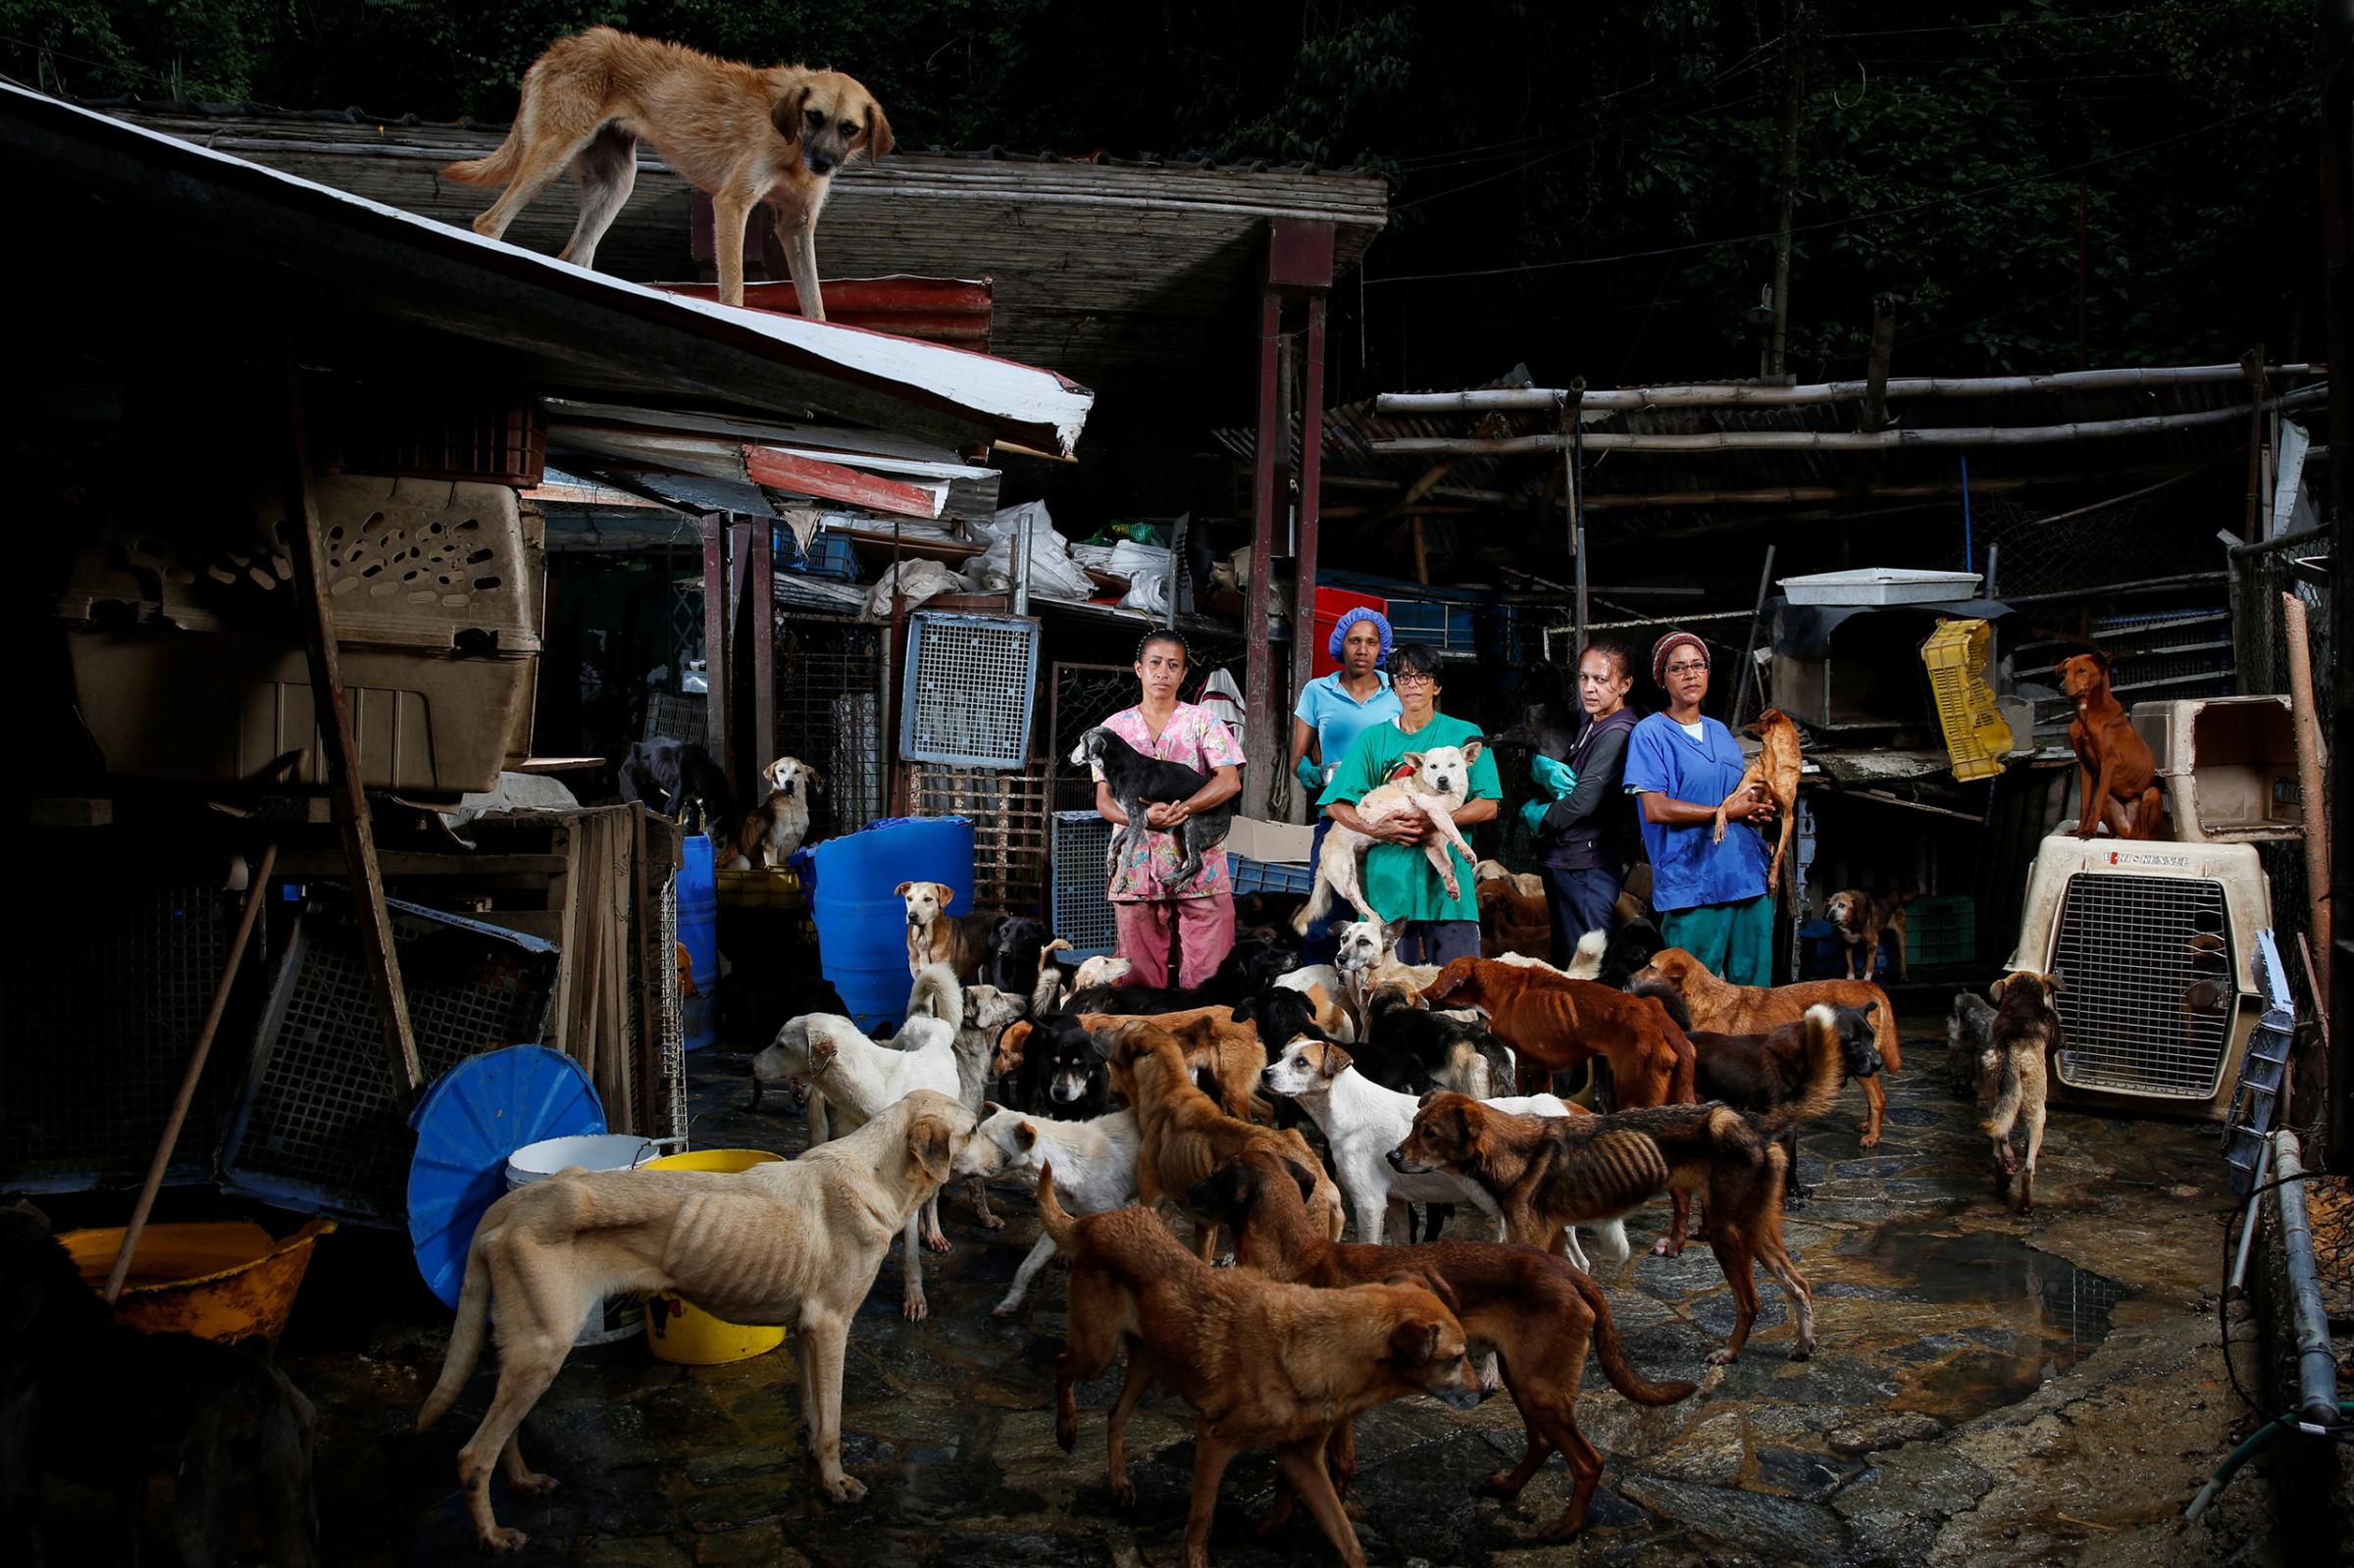 Maria Silva, Milena Cortes, Maria Arteaga, Jackeline Bastidas and Gissy Abello pose for a picture at the Famproa dogs shelter where they work, in Los Teques, Venezuela, Aug. 25, 2016.